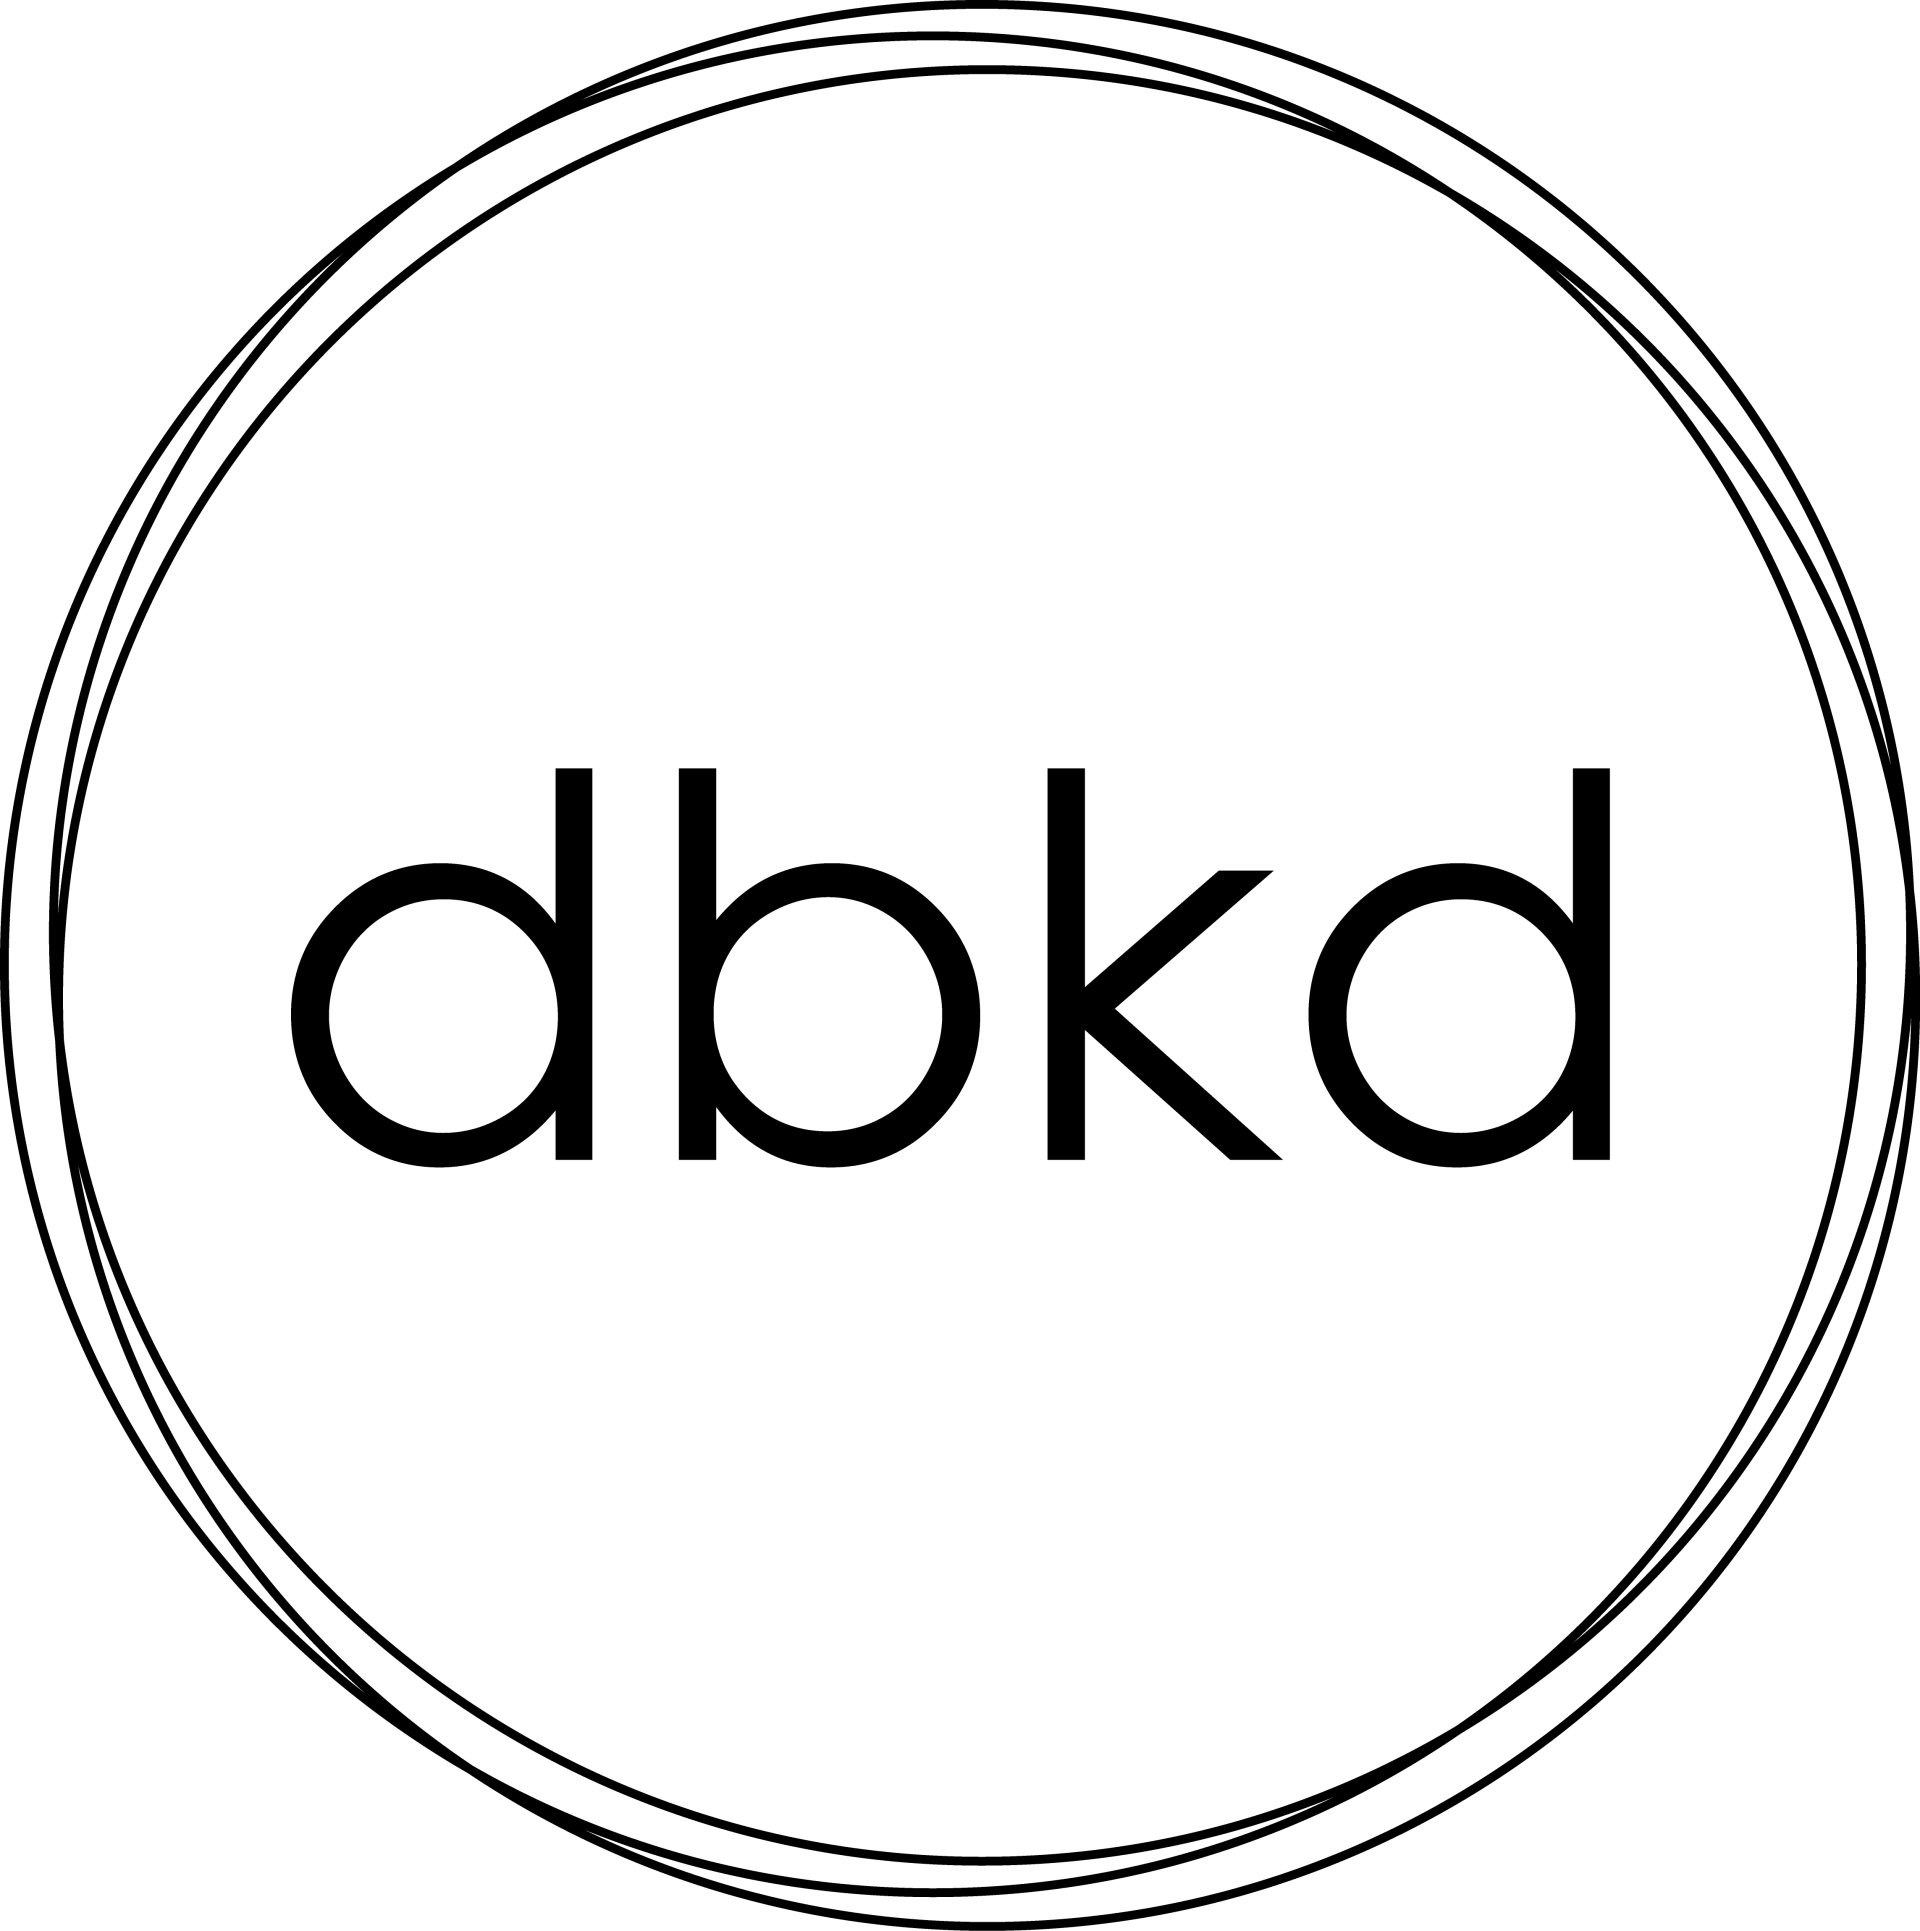 dbkd logo